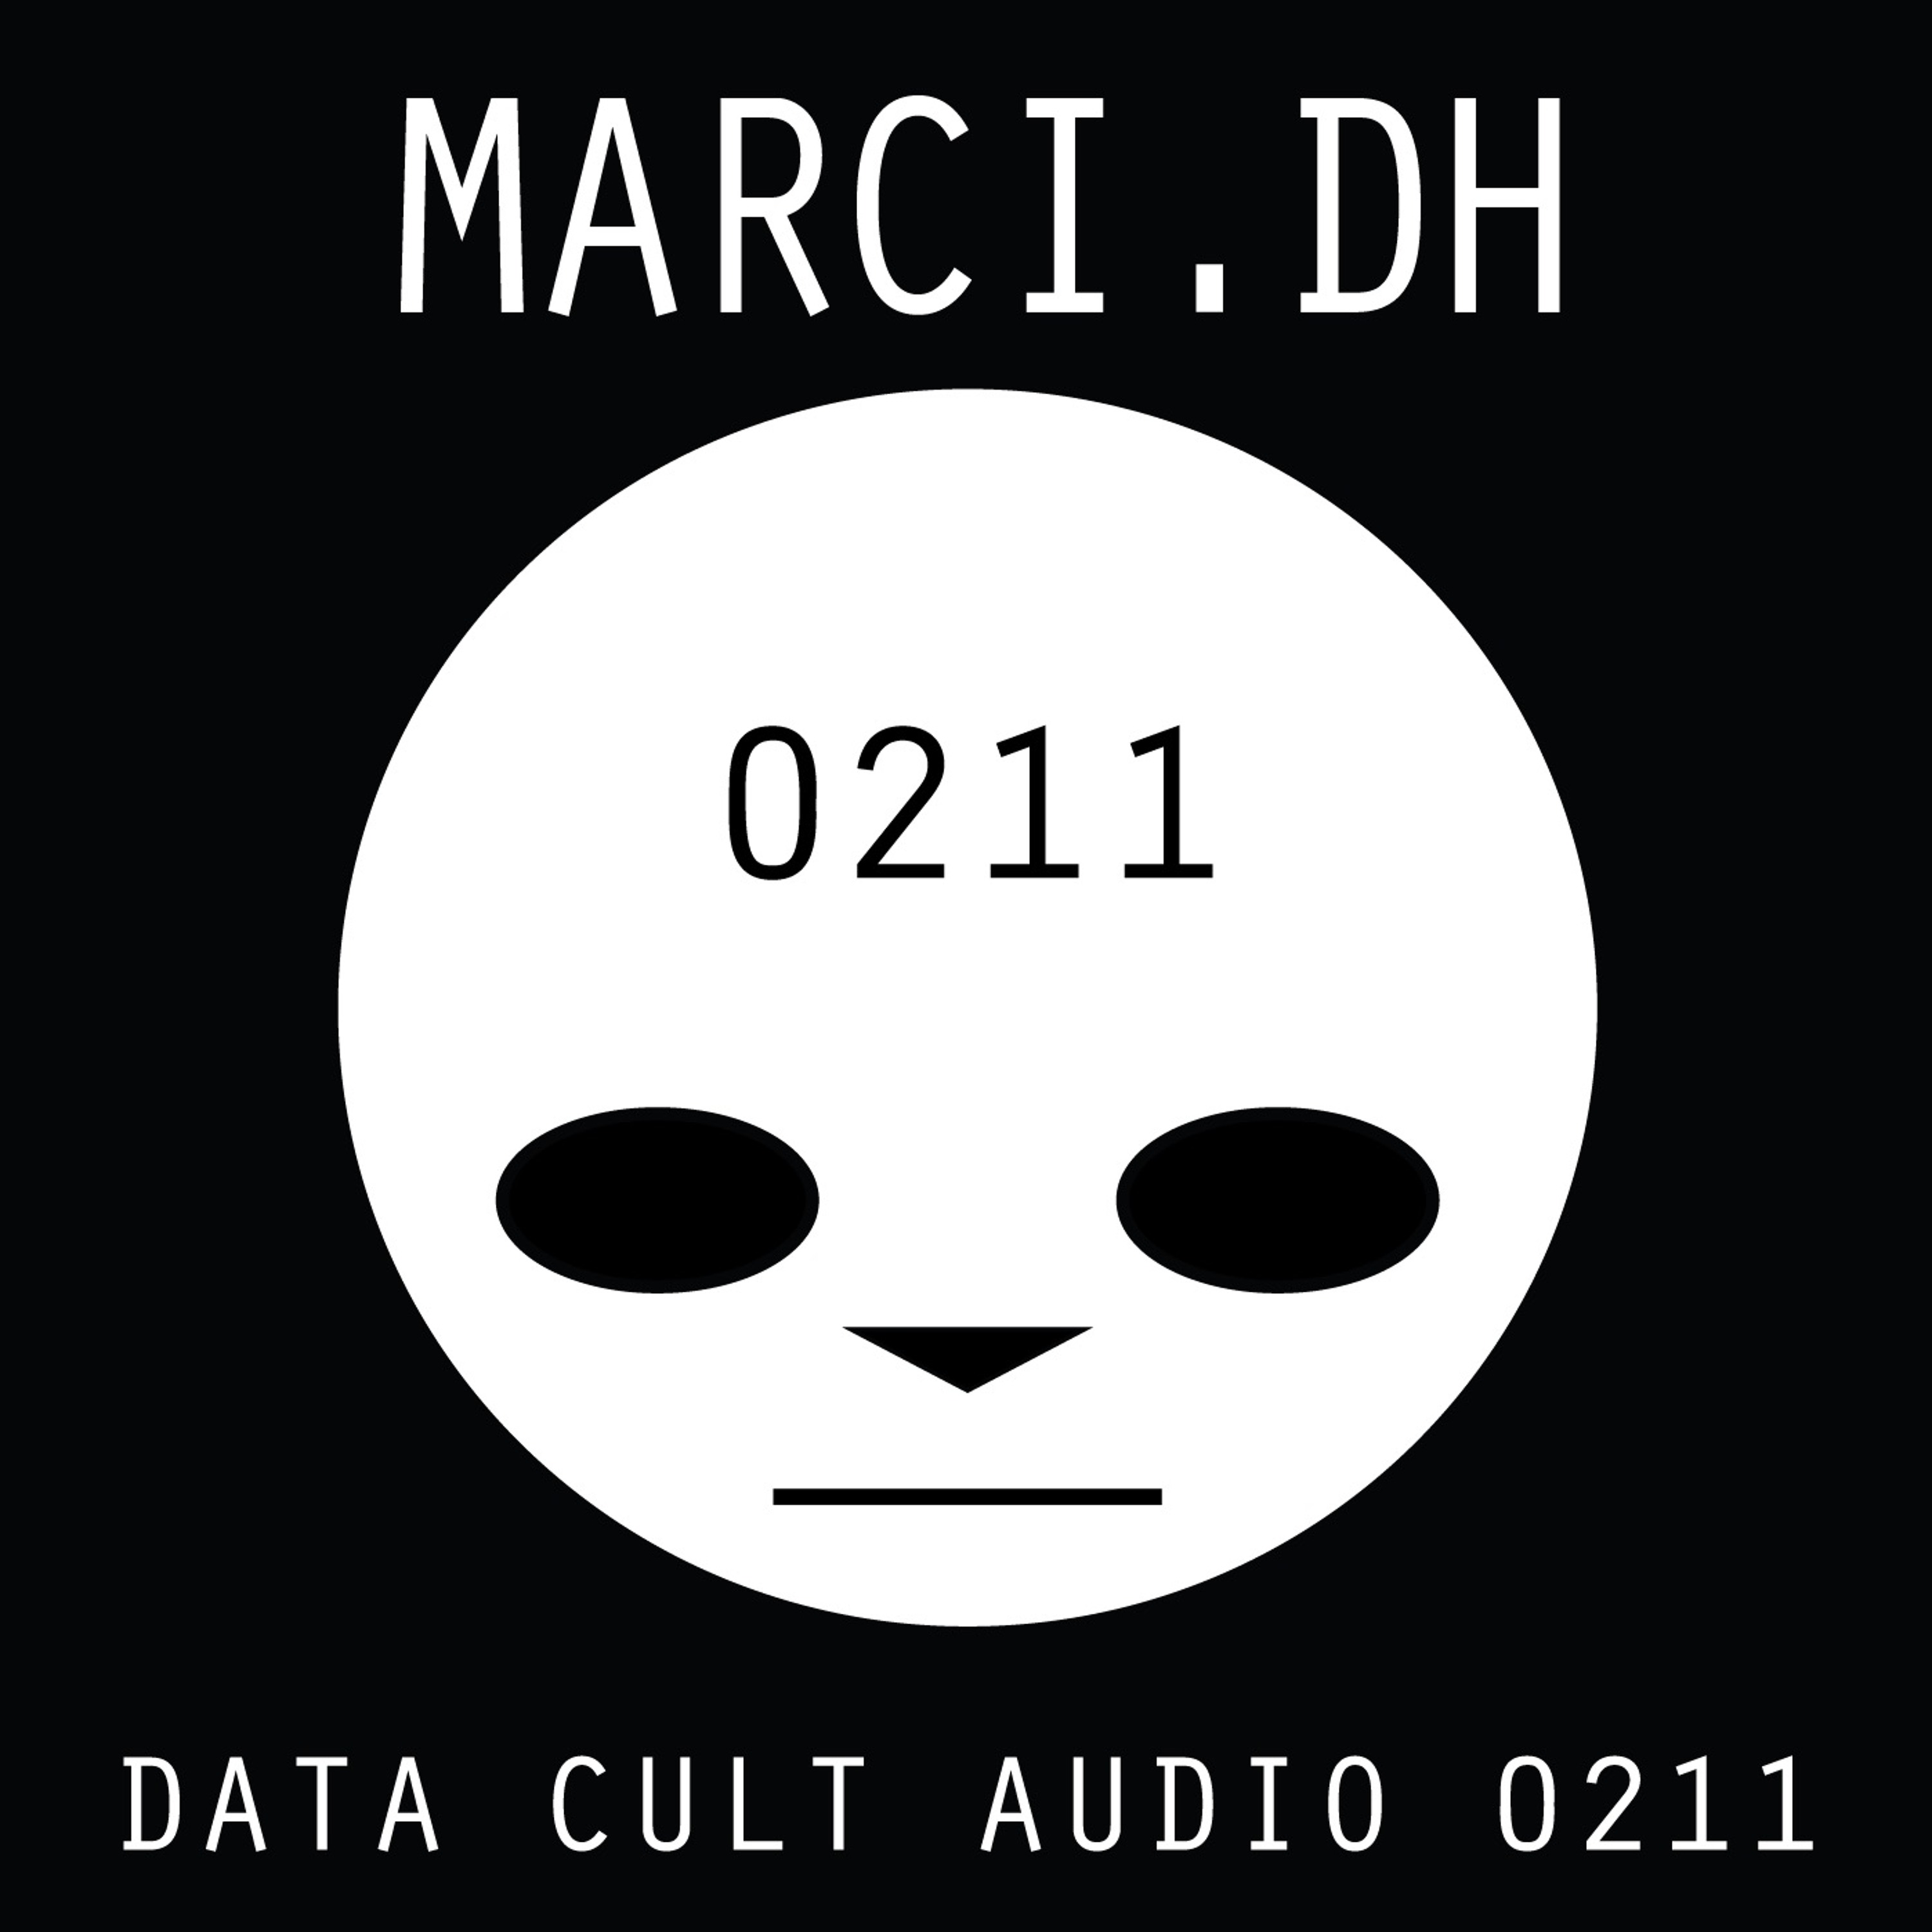 Data Cult Audio 0211 - Marci.DH